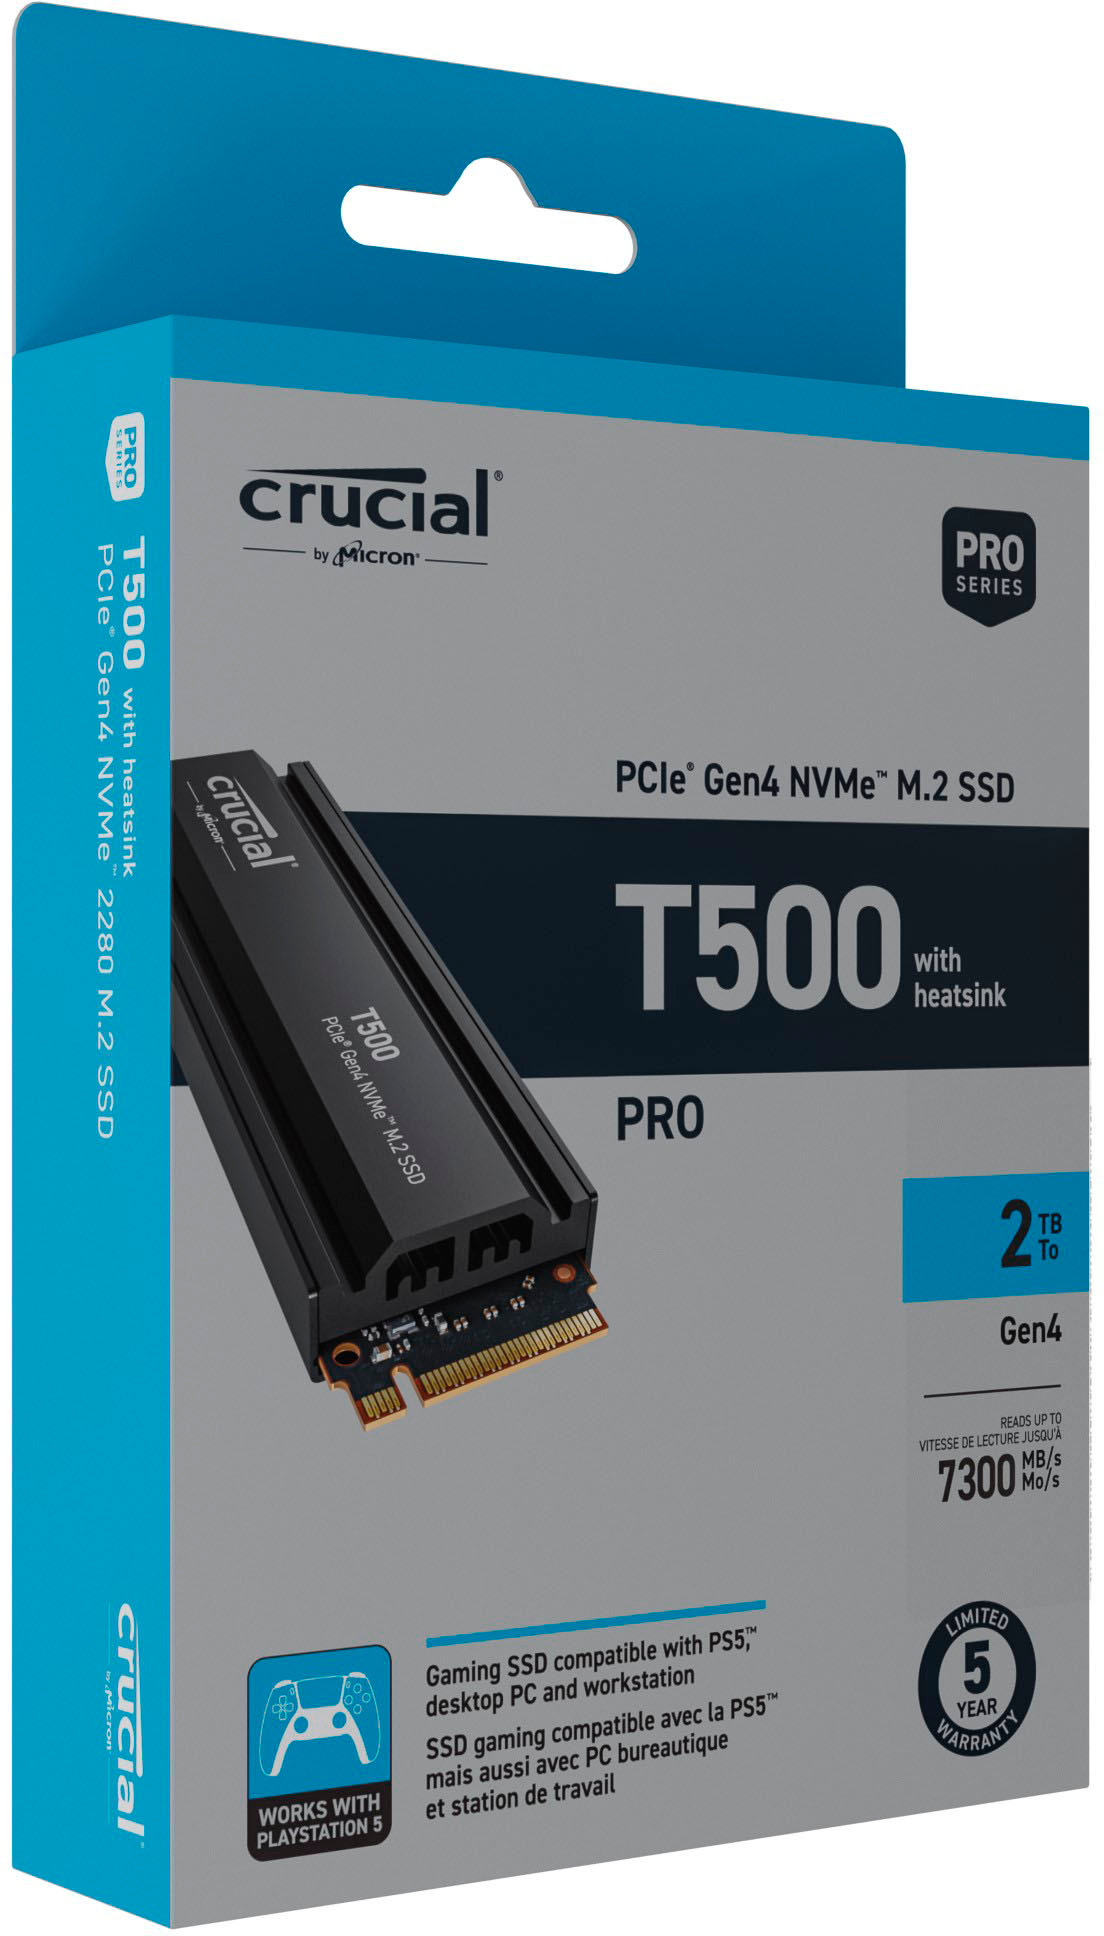  Crucial T500 2TB Gen4 NVMe M.2 Internal Gaming SSD